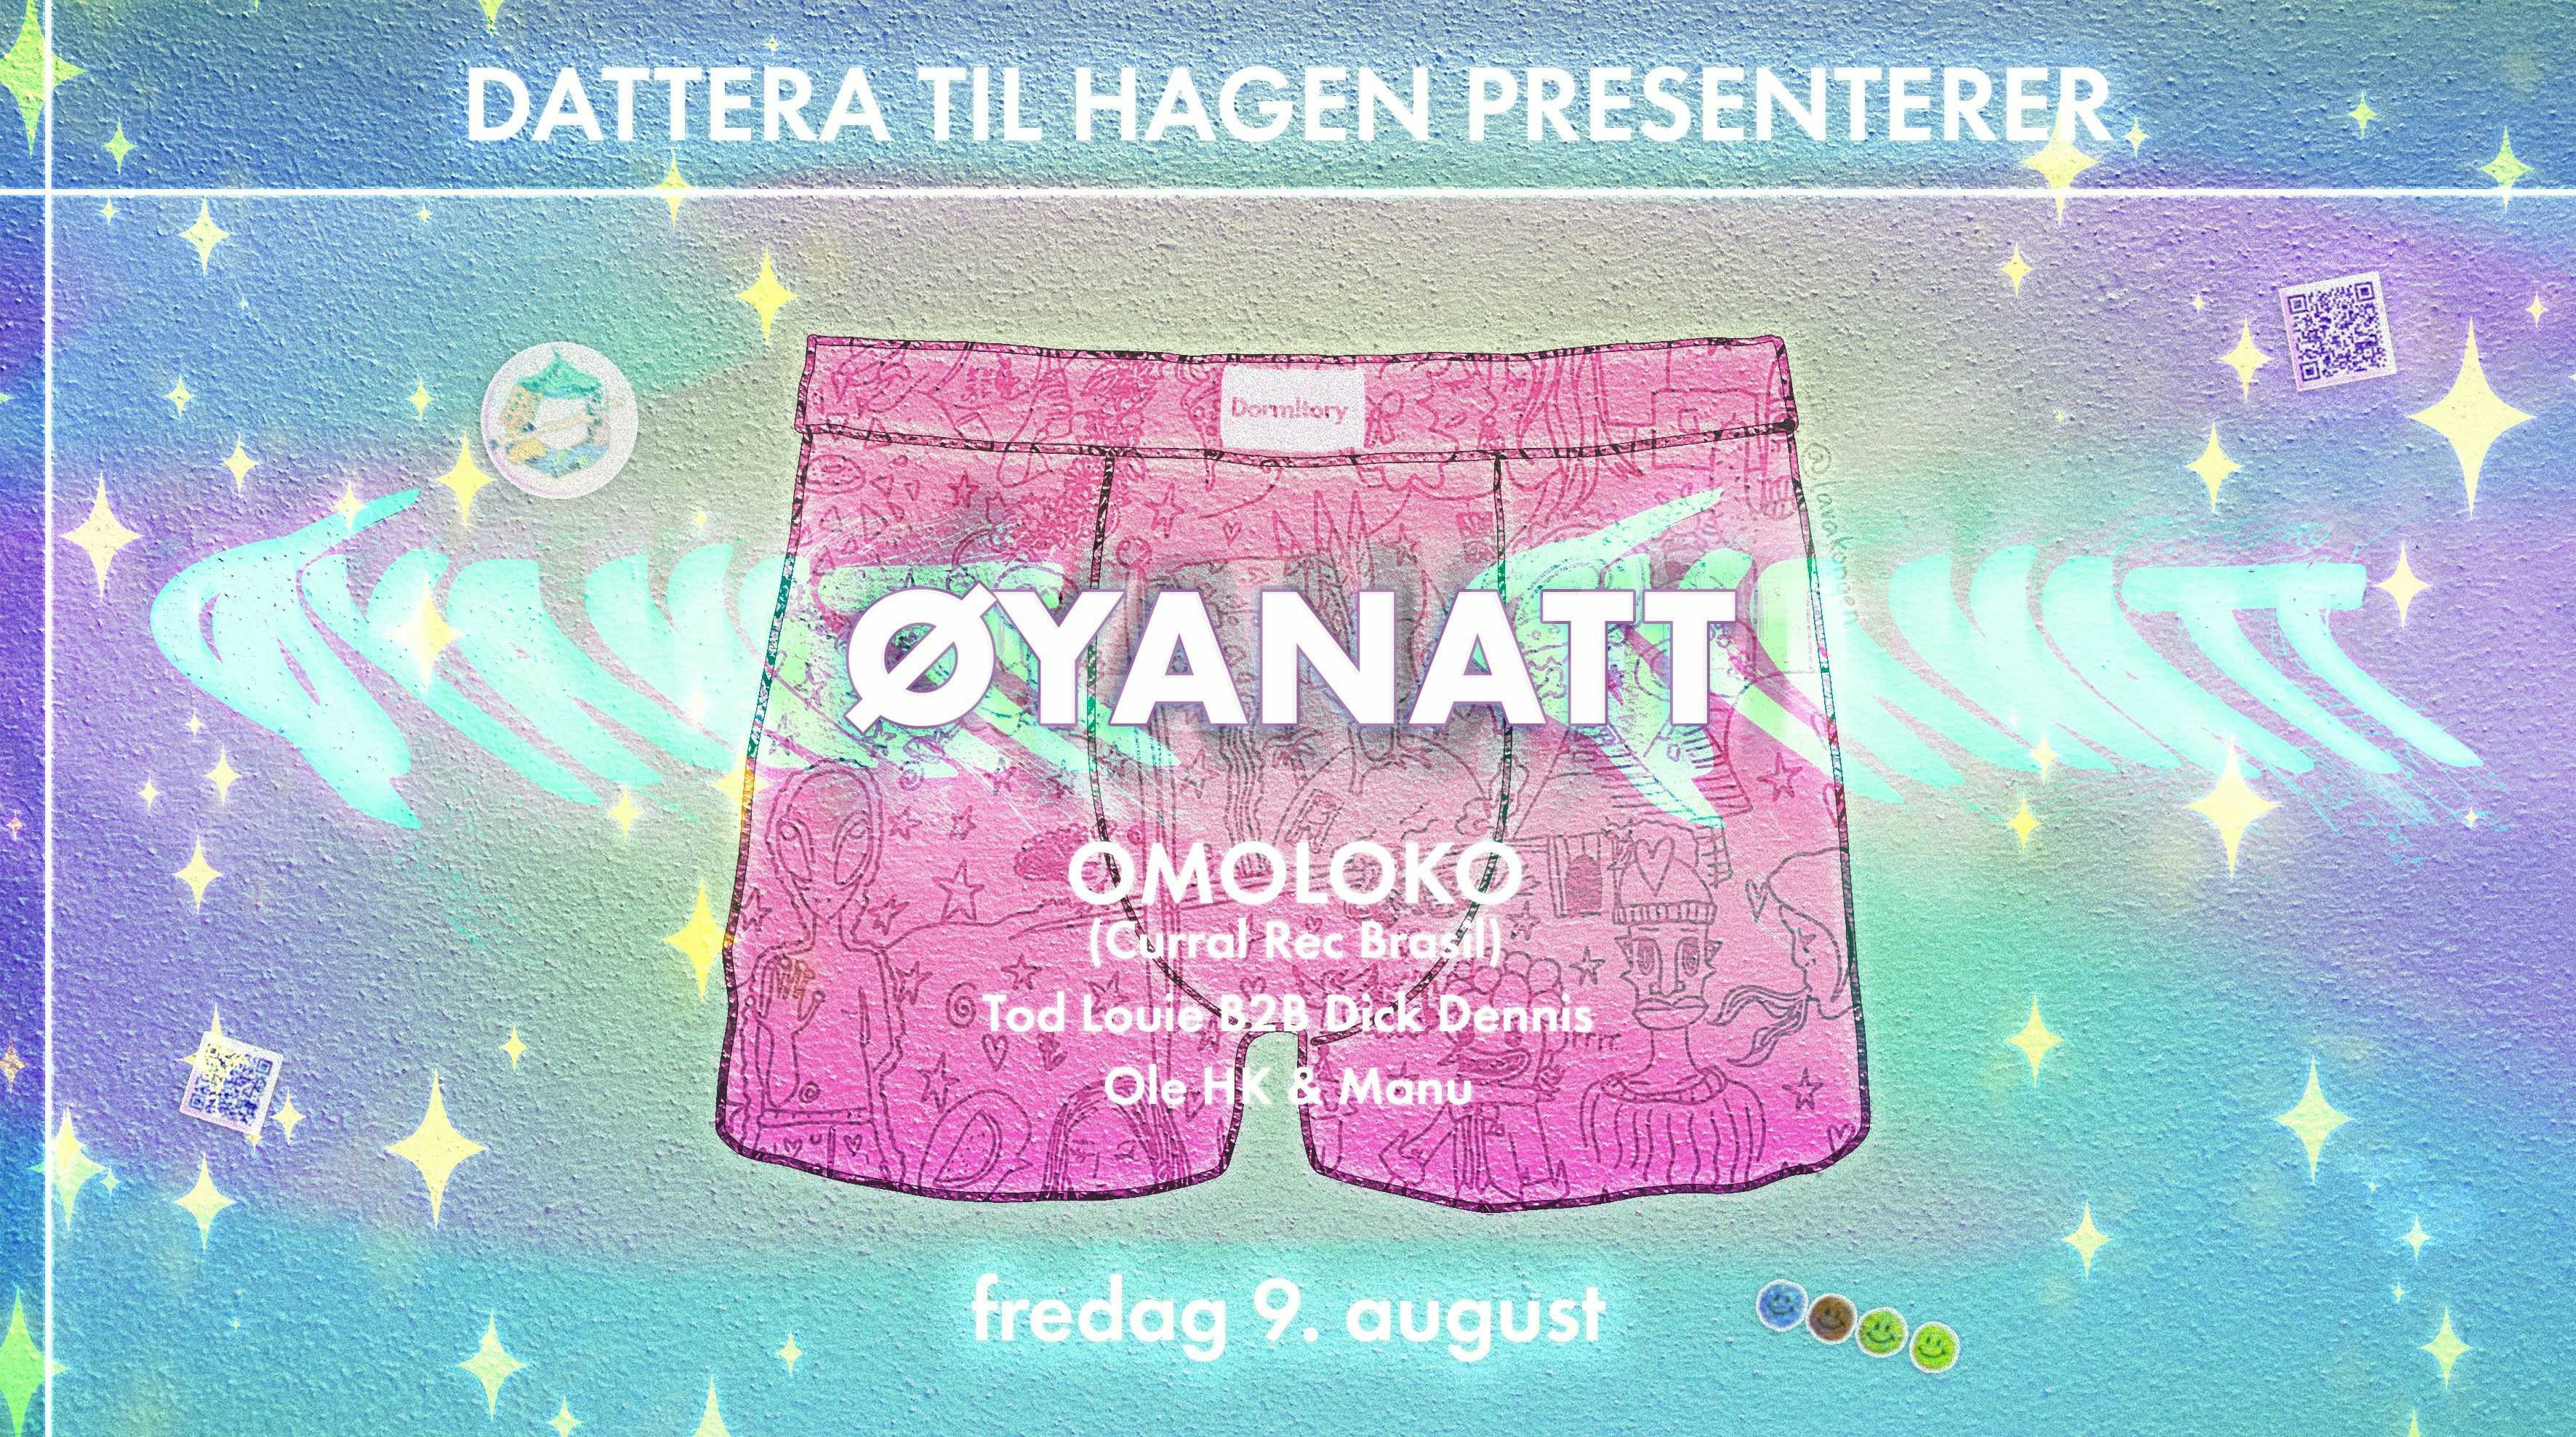 Programmet for Øyanatt på Dattera til Hagen fredag 9. august